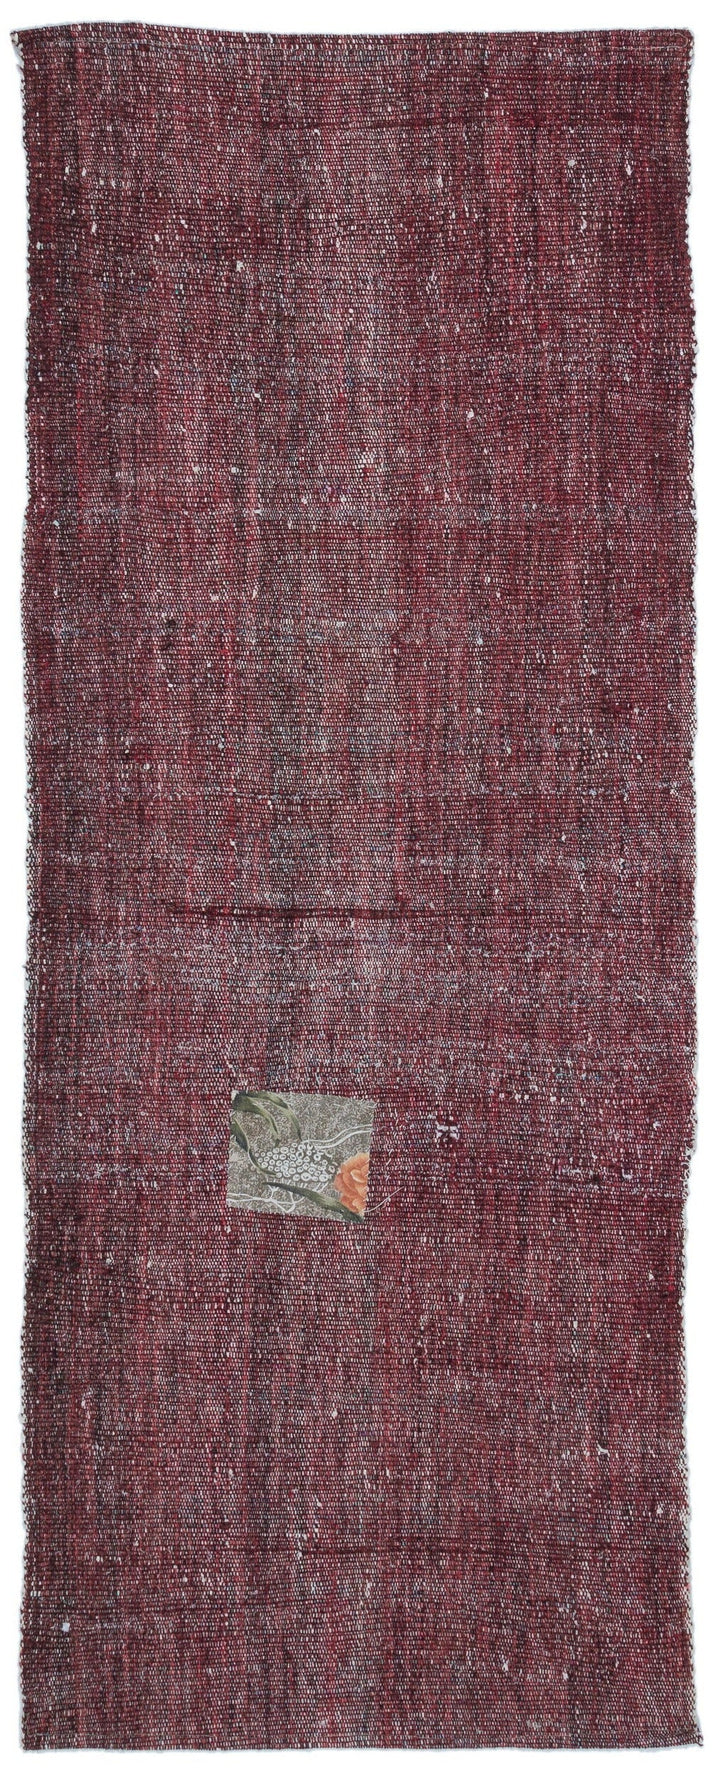 Cretan Red Striped Wool Hand-Woven Carpet 084 x 211